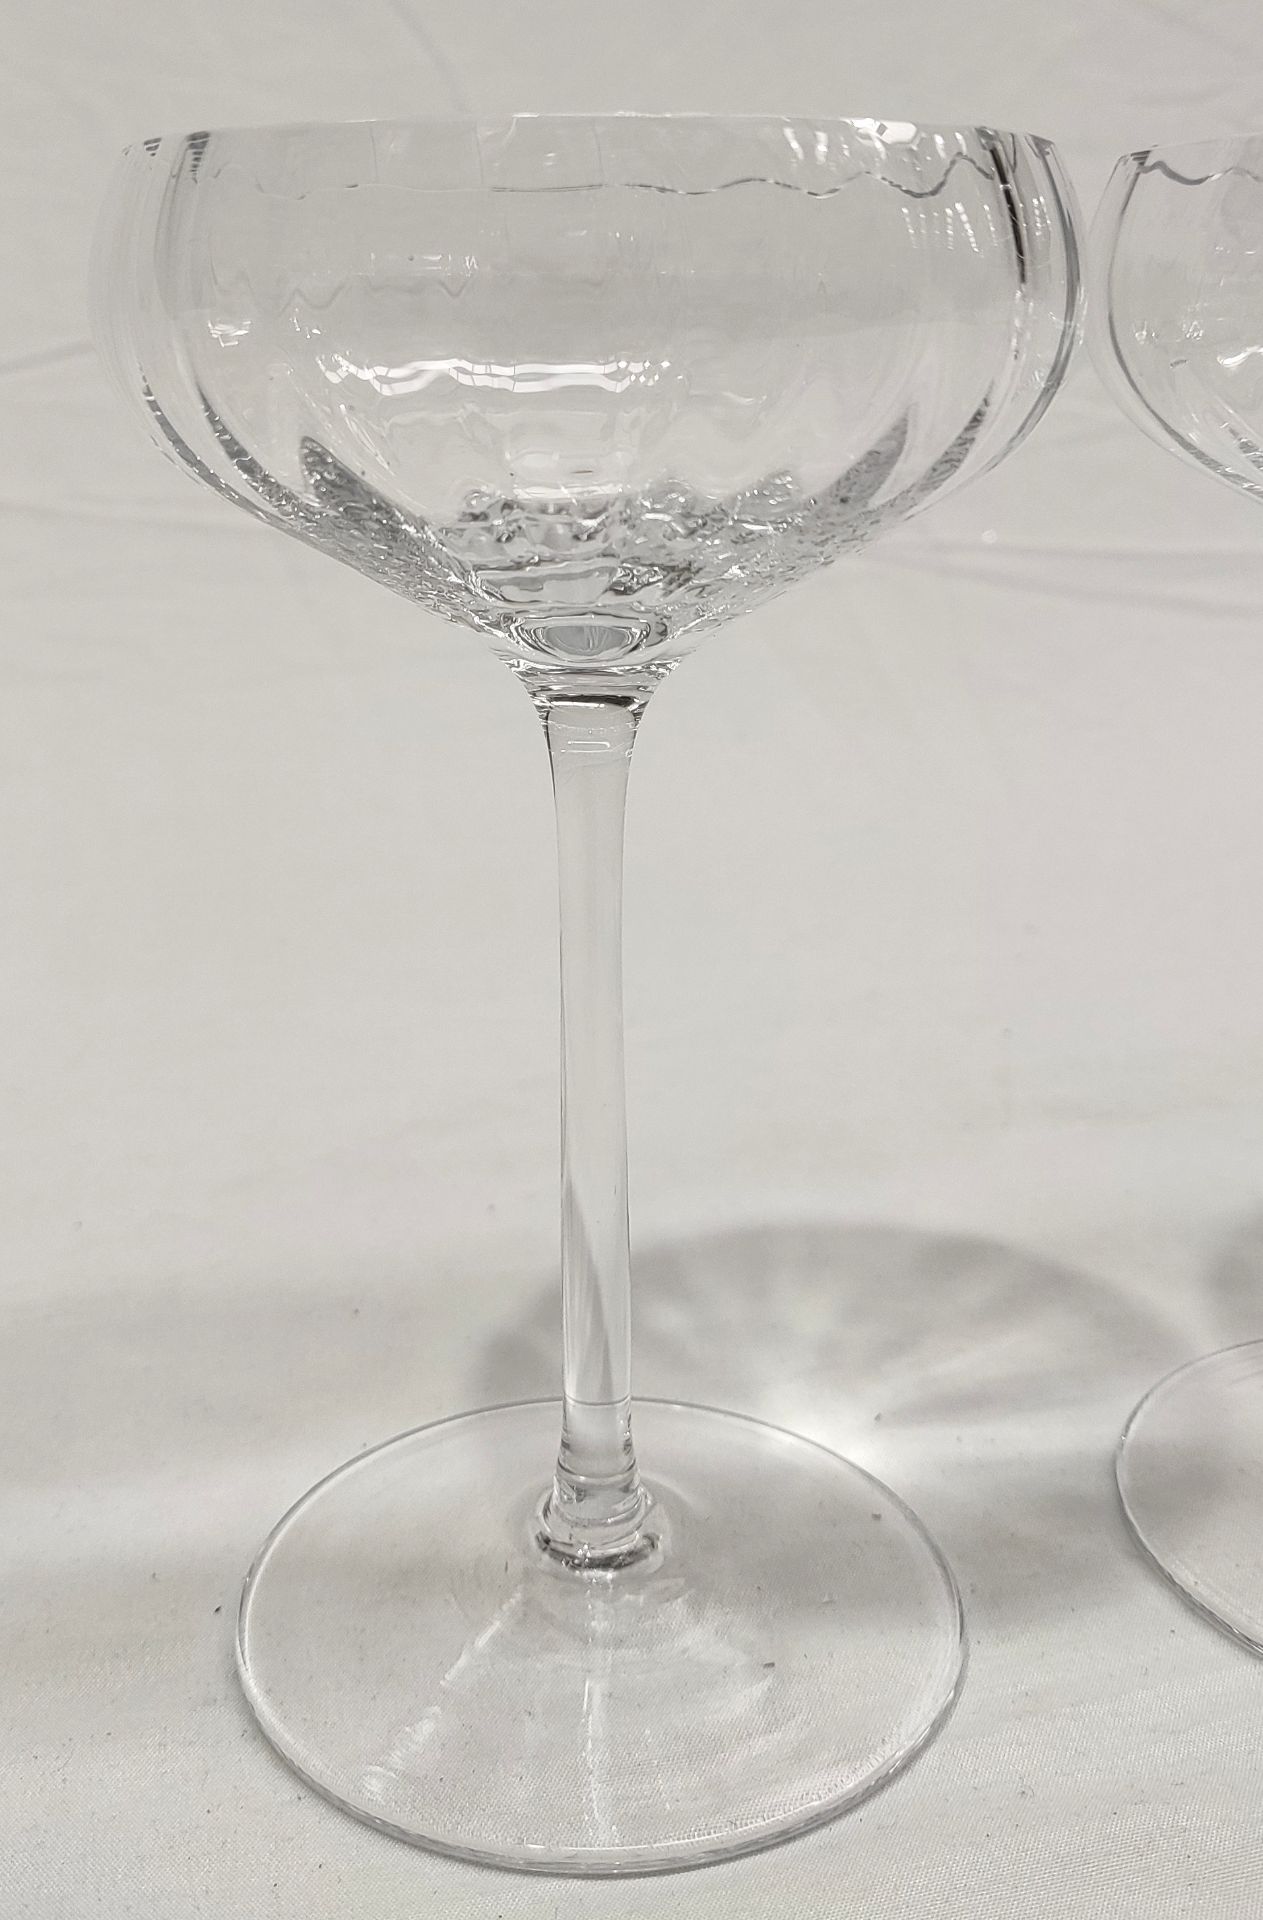 1 x SOHO HOME Pembroke Champagne Coupe - 3 Glasses - Boxed - Original RRP £72 - Ref: 6741245/ - Image 14 of 17